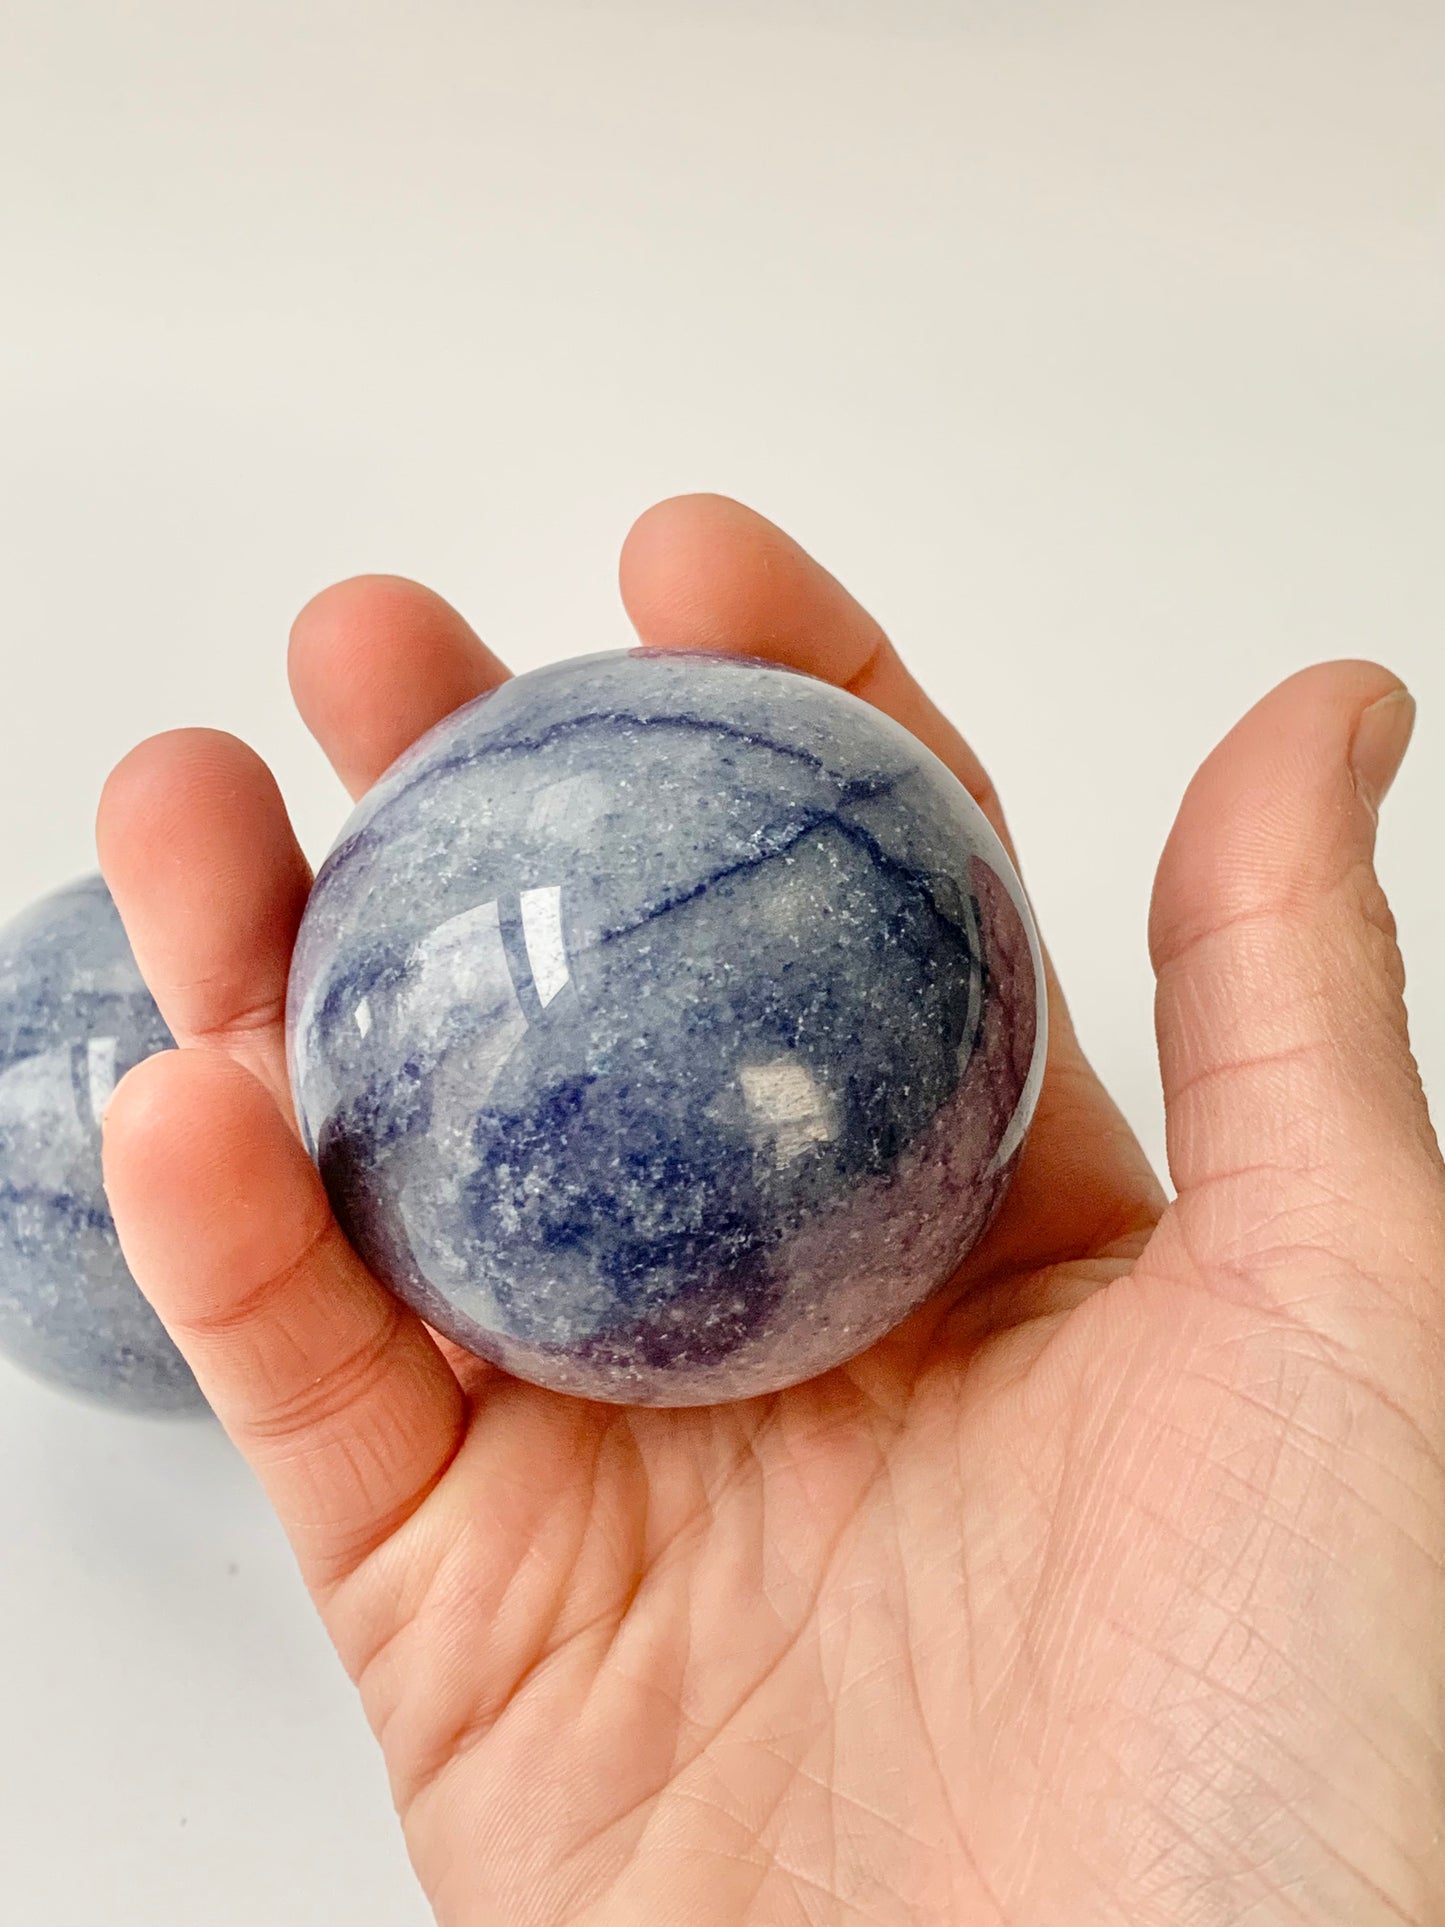 Blue aventurine spheres, 58-60mm